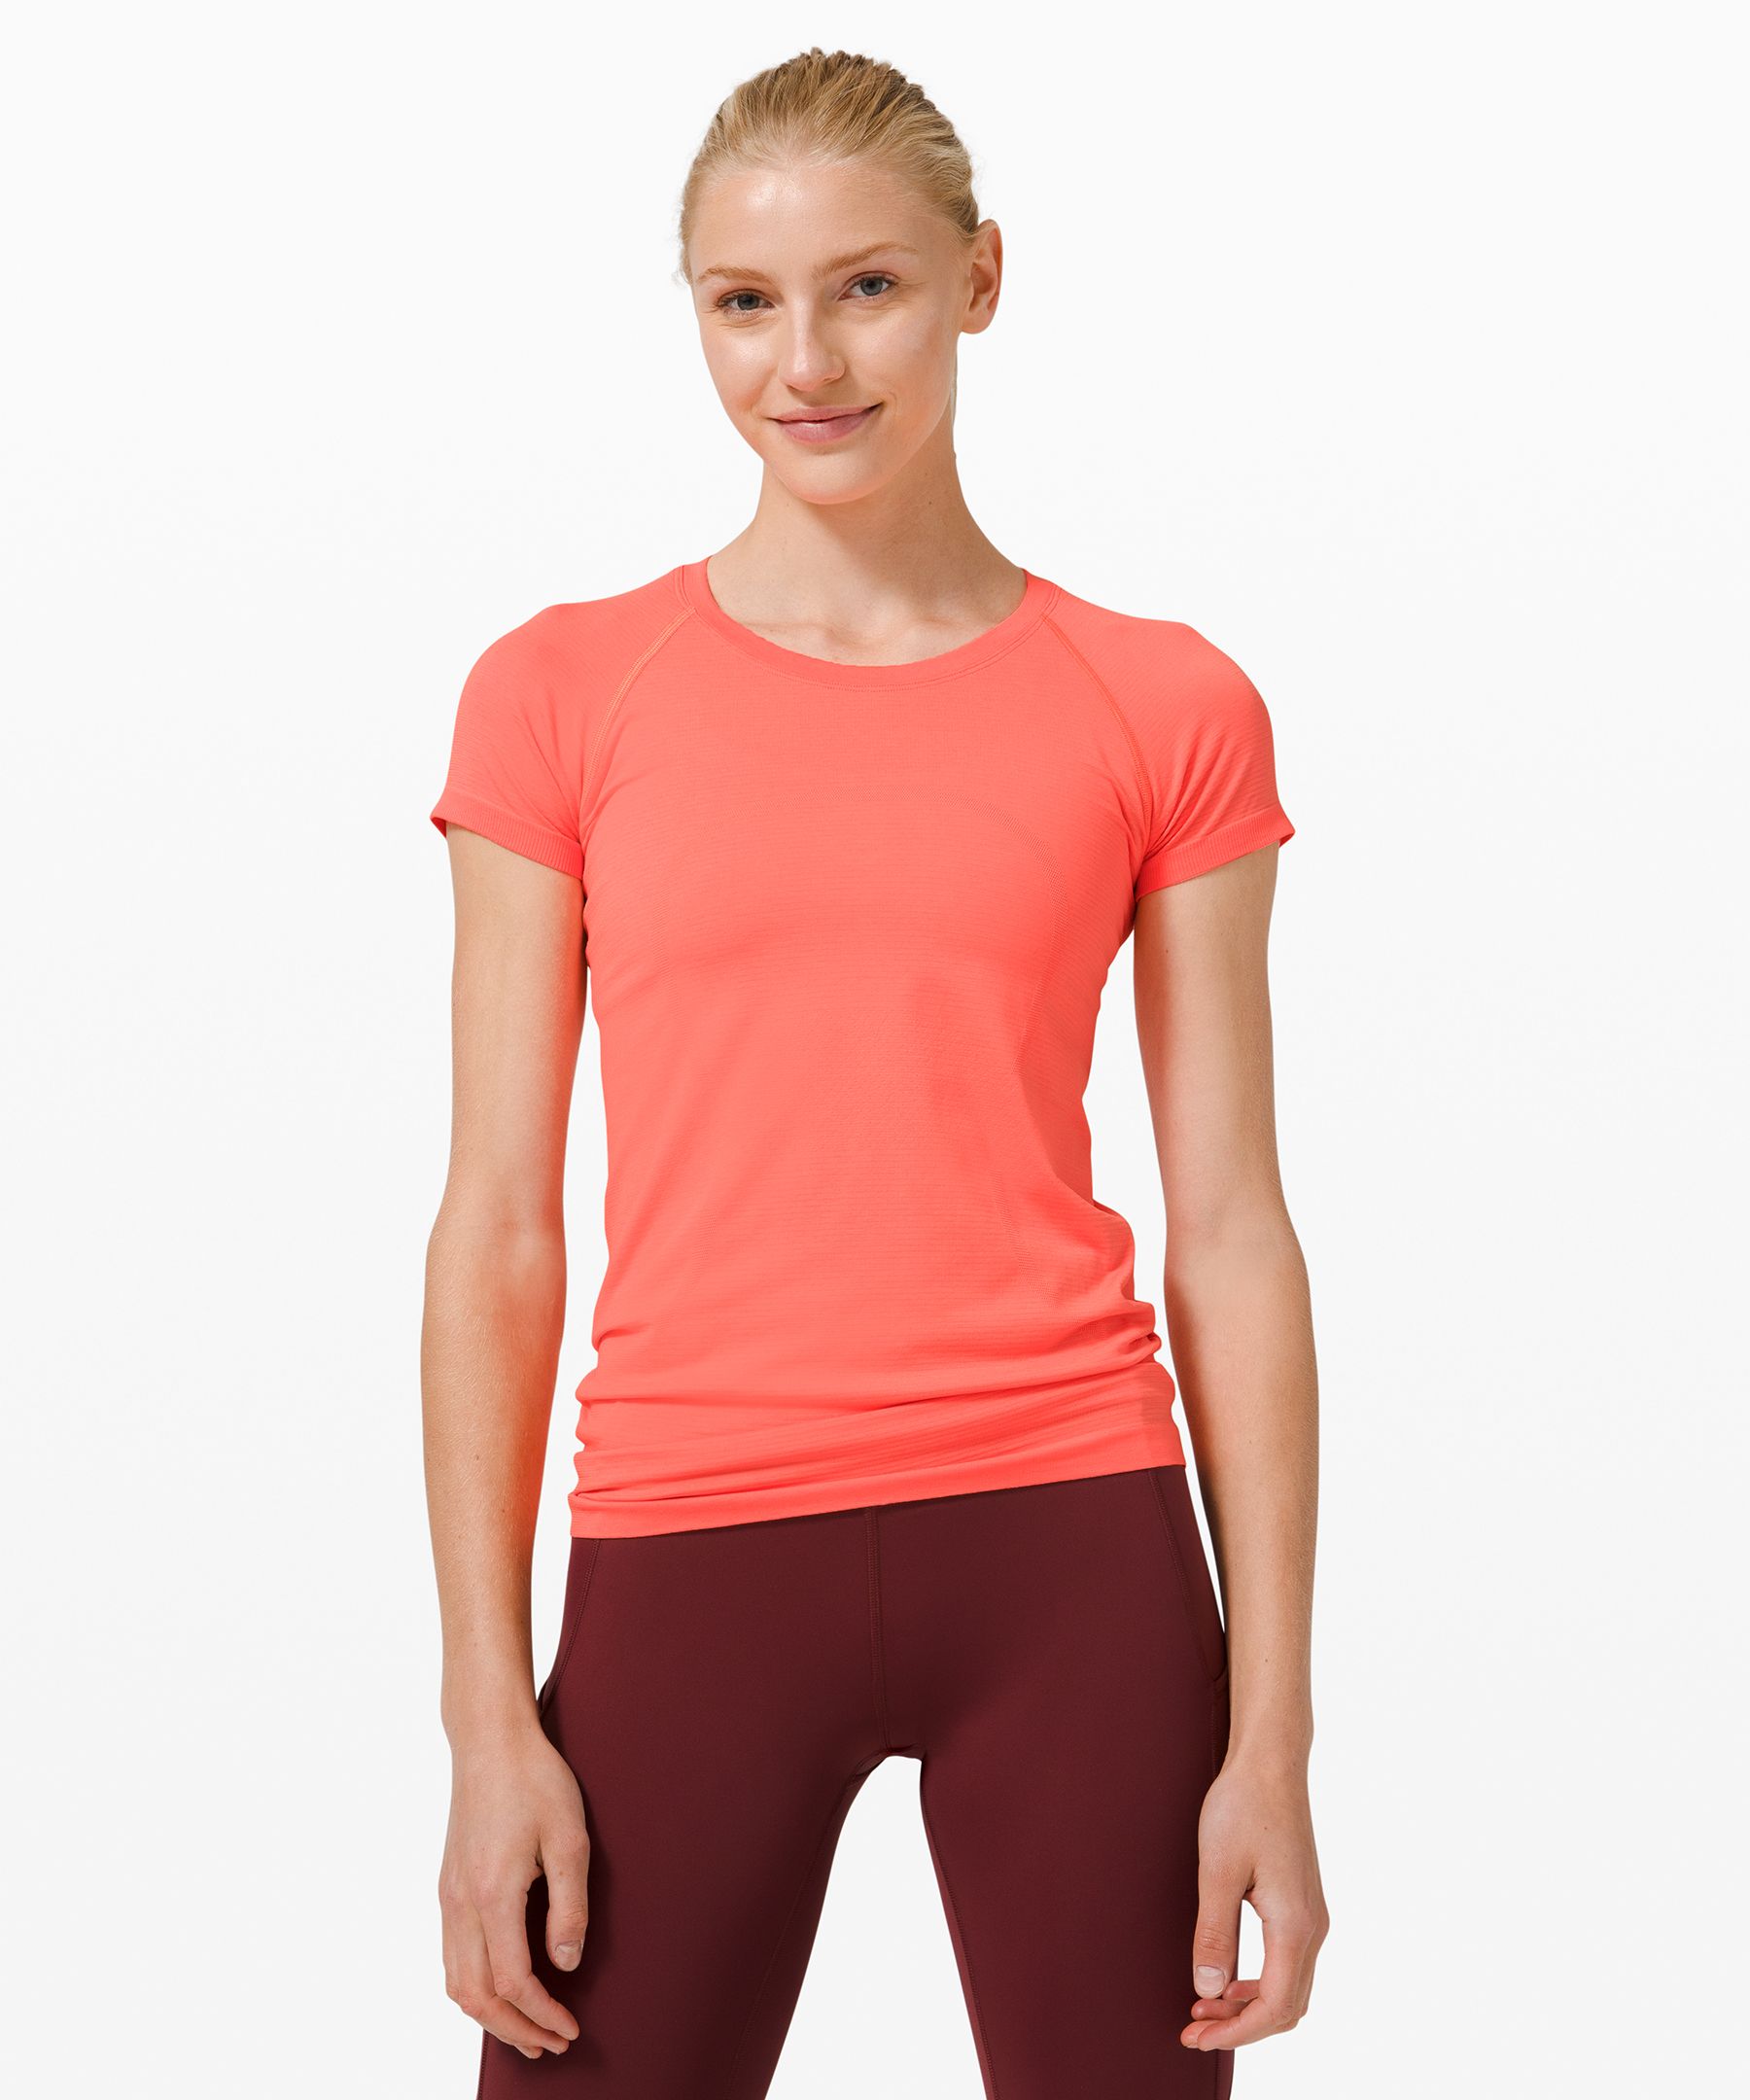 Lululemon Swiftly Tech Short Sleeve Shirt 2.0 In Orange